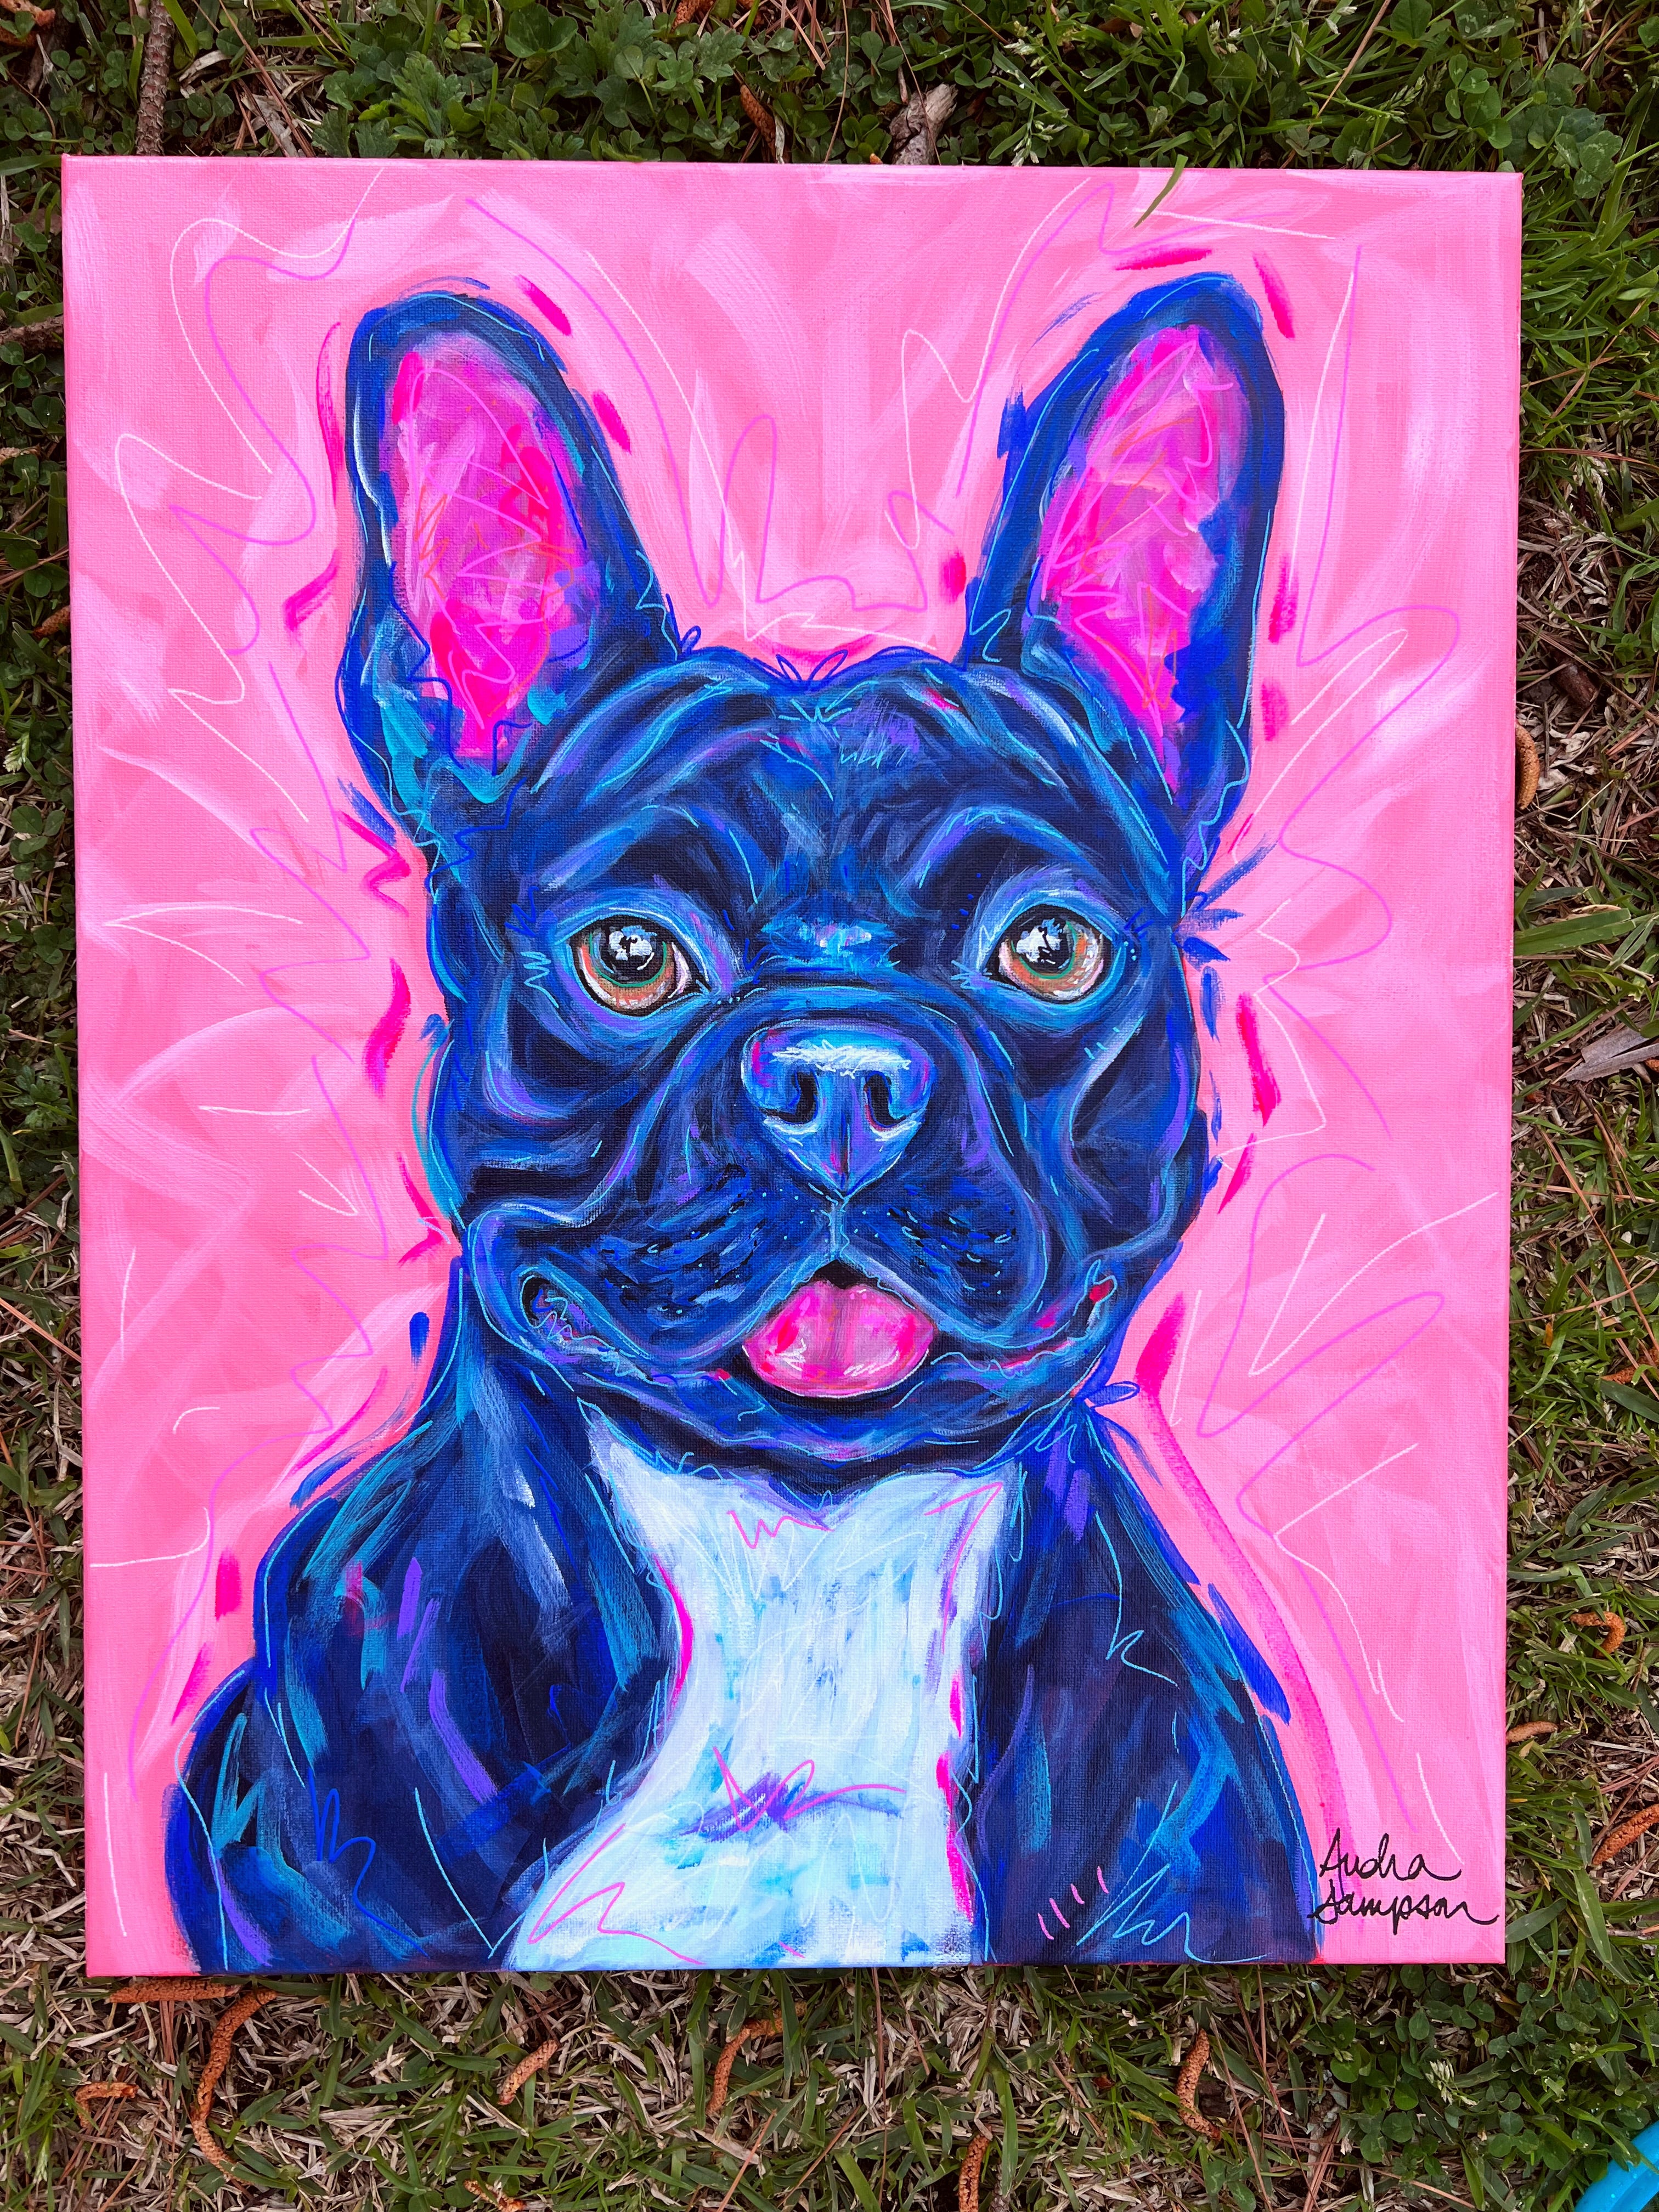 Black French Bulldog Original Painting on 16x20 Canvas